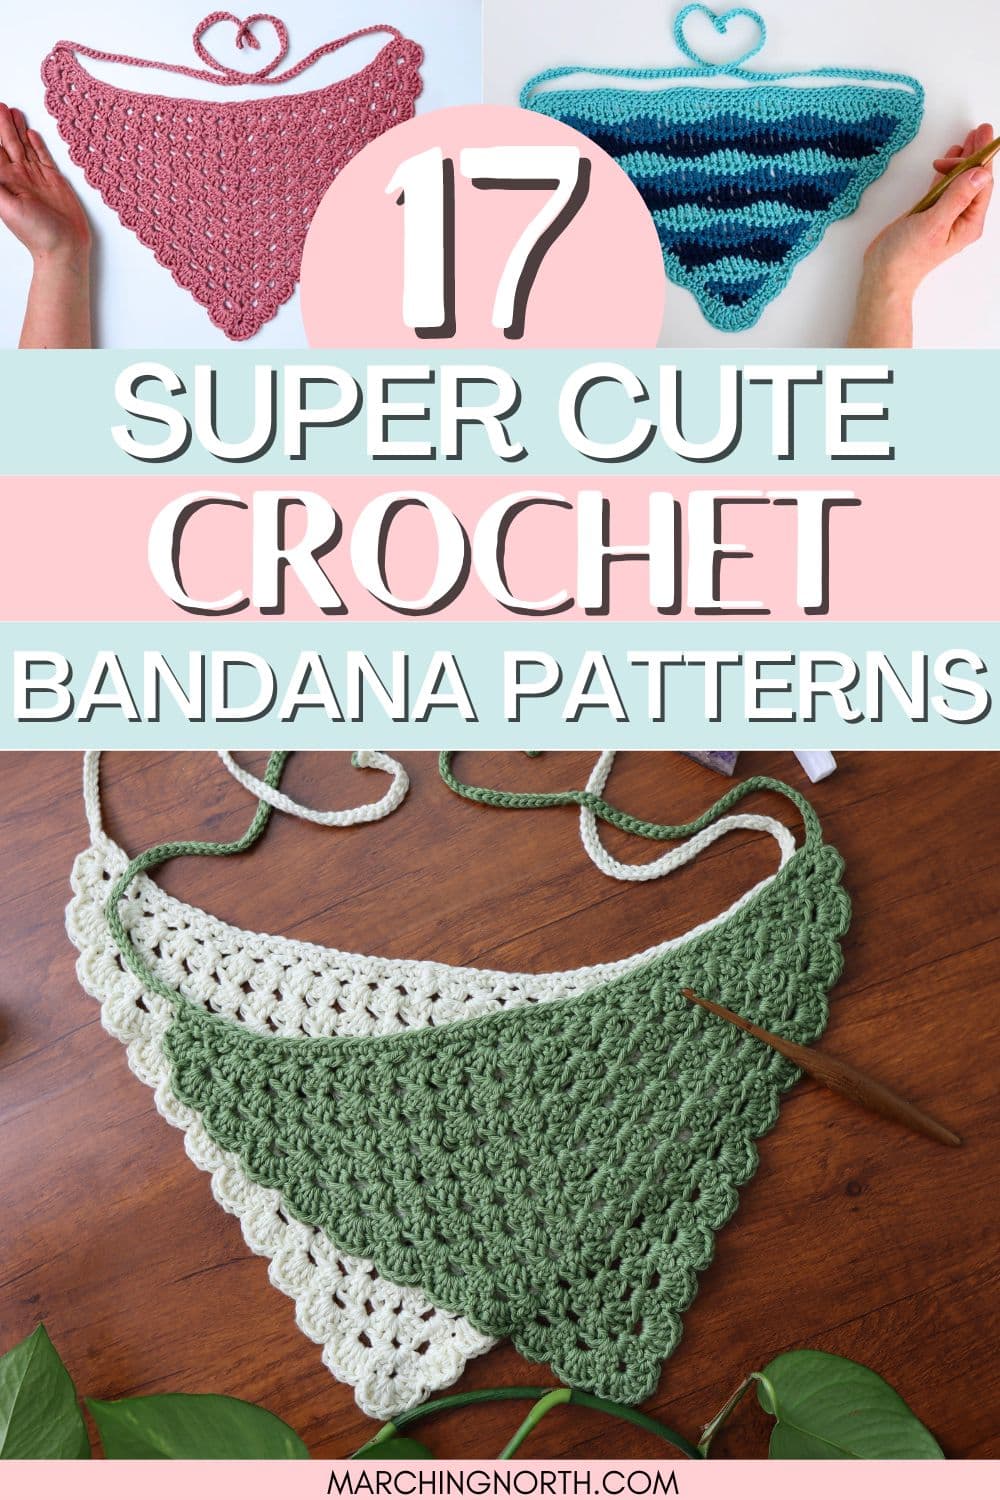 Pinterest pin for crochet bandana patterns post